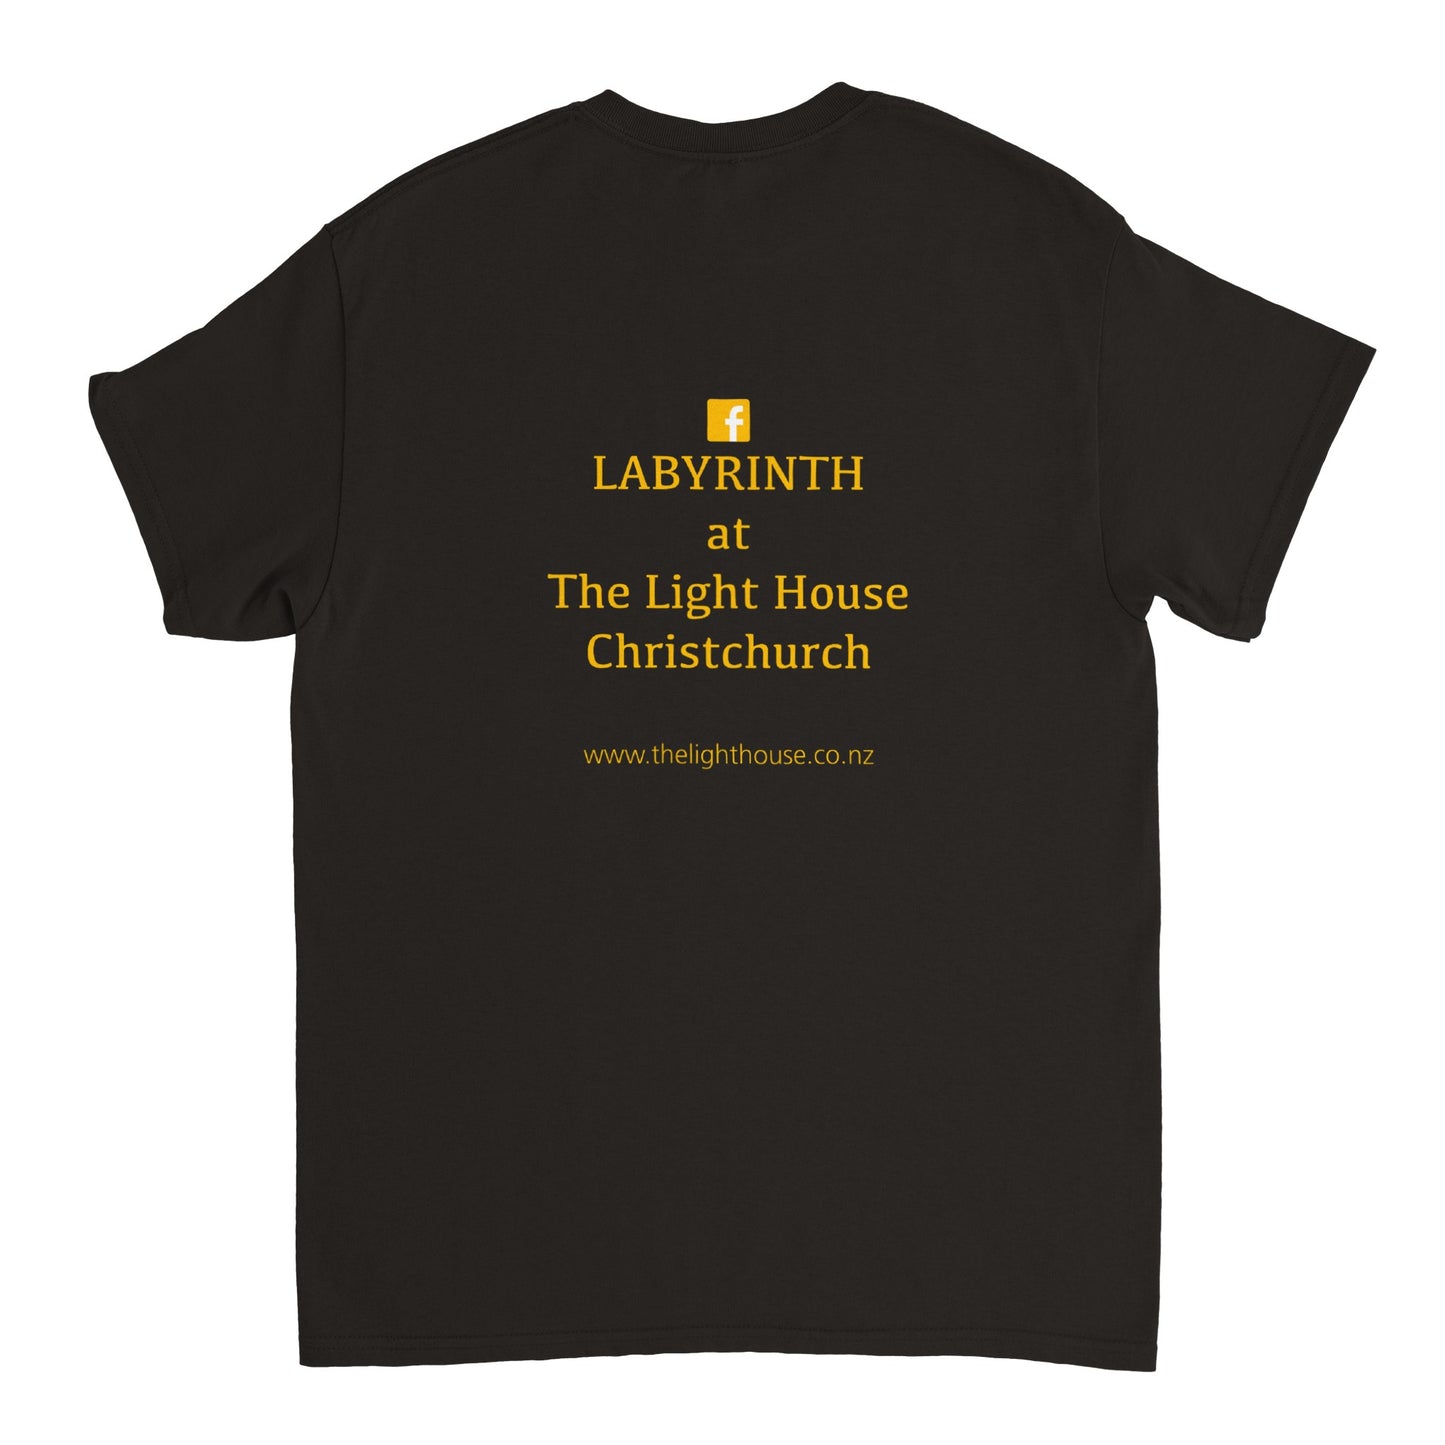 Labyrinth Walk Free Heavyweight Unisex Crewneck T-shirt